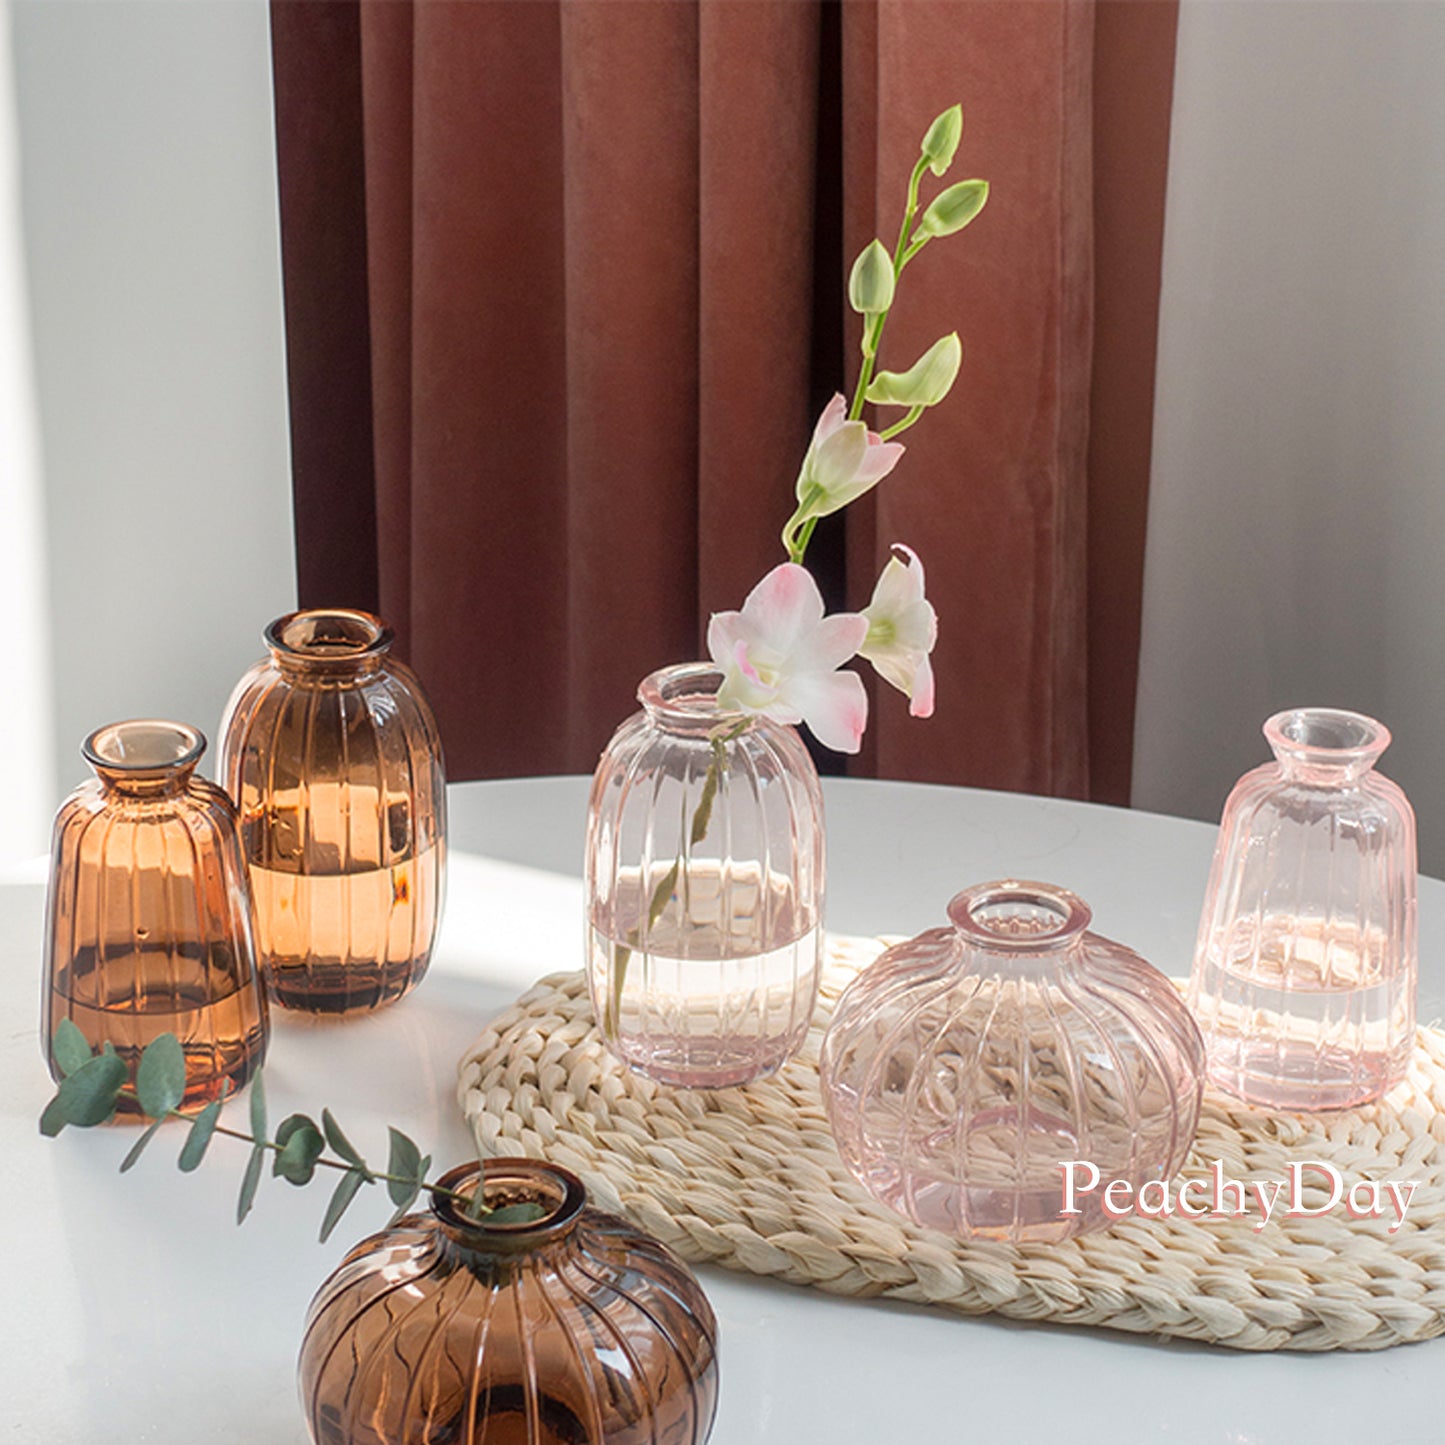 Glass Vase Set in 4 Colors